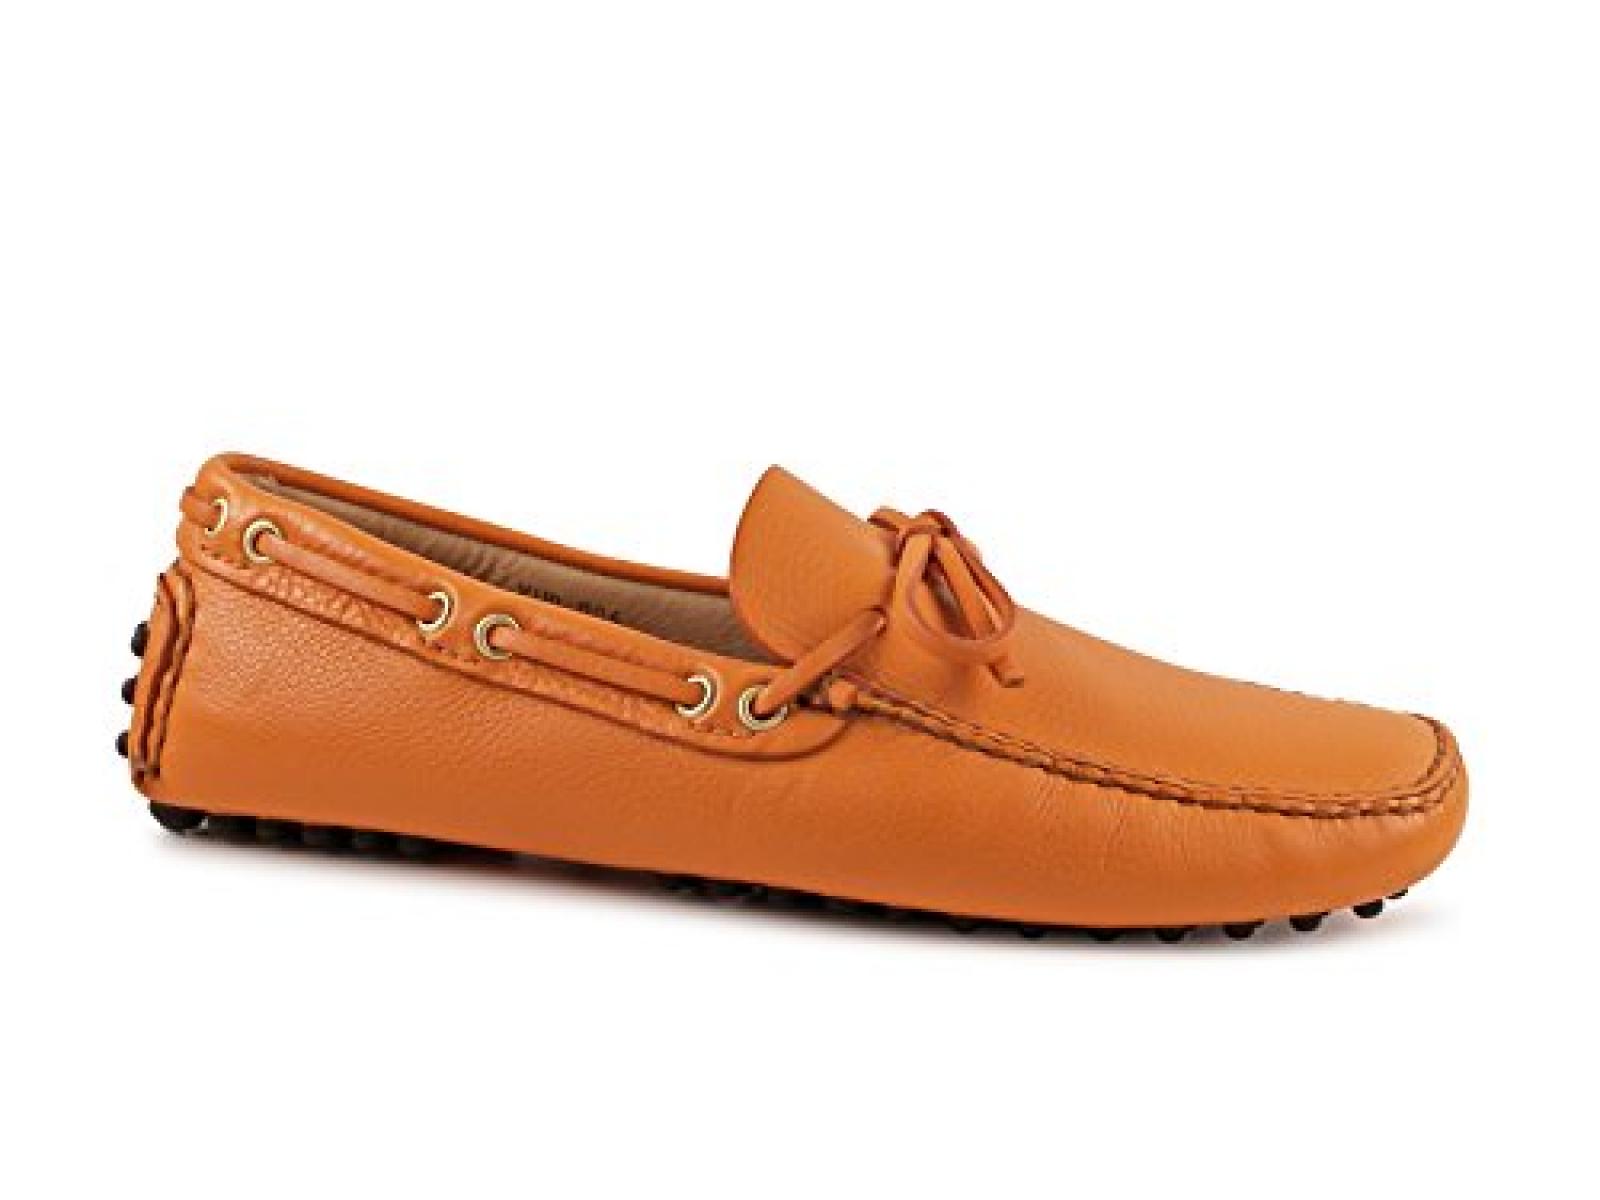 Car Shoe Herren orange Leder Slipper Schuhe fahren - Modellnummer: KUD006 XW8 F01BU04 